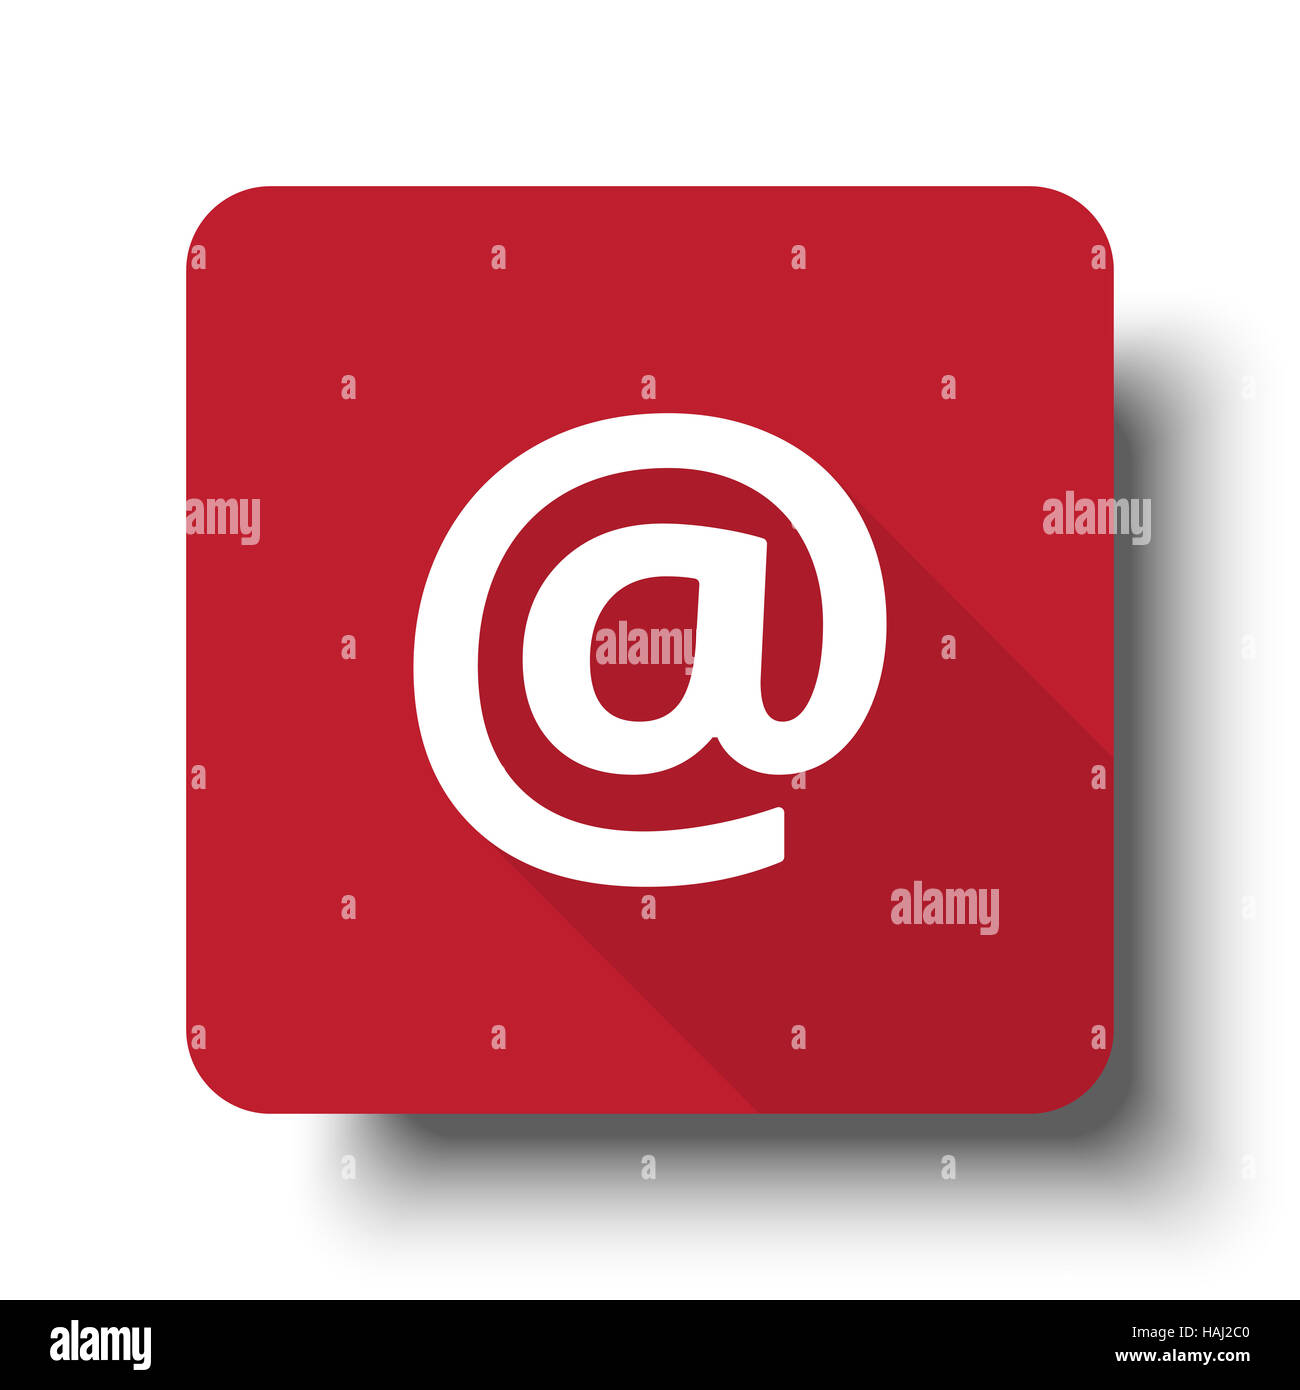 Piso E-Mail web icono de botón rojo con sombra Foto de stock